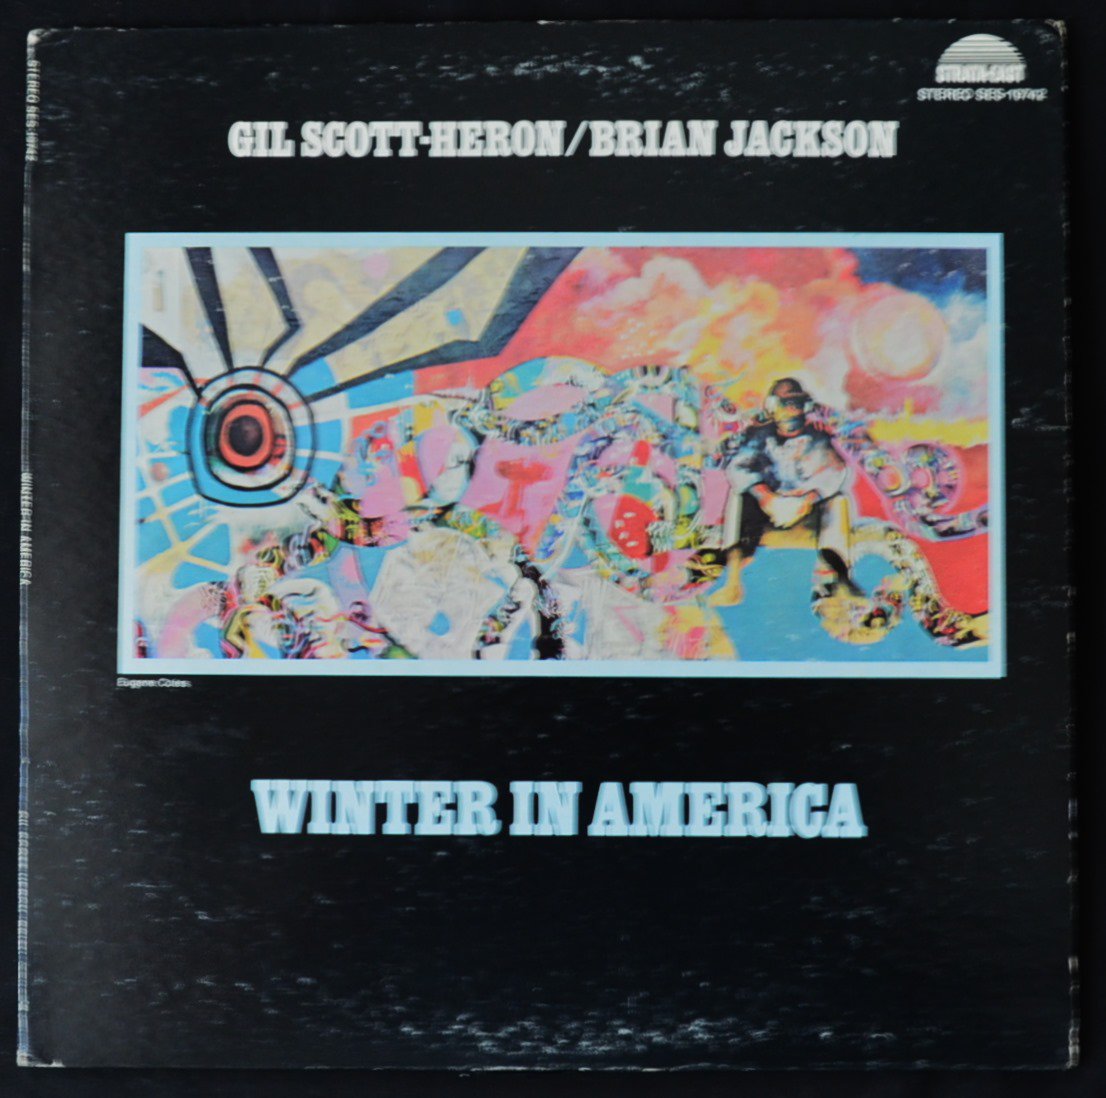 GIL SCOTT-HERON / BRIAN JACKSON / WINTER IN AMERICA (LP)